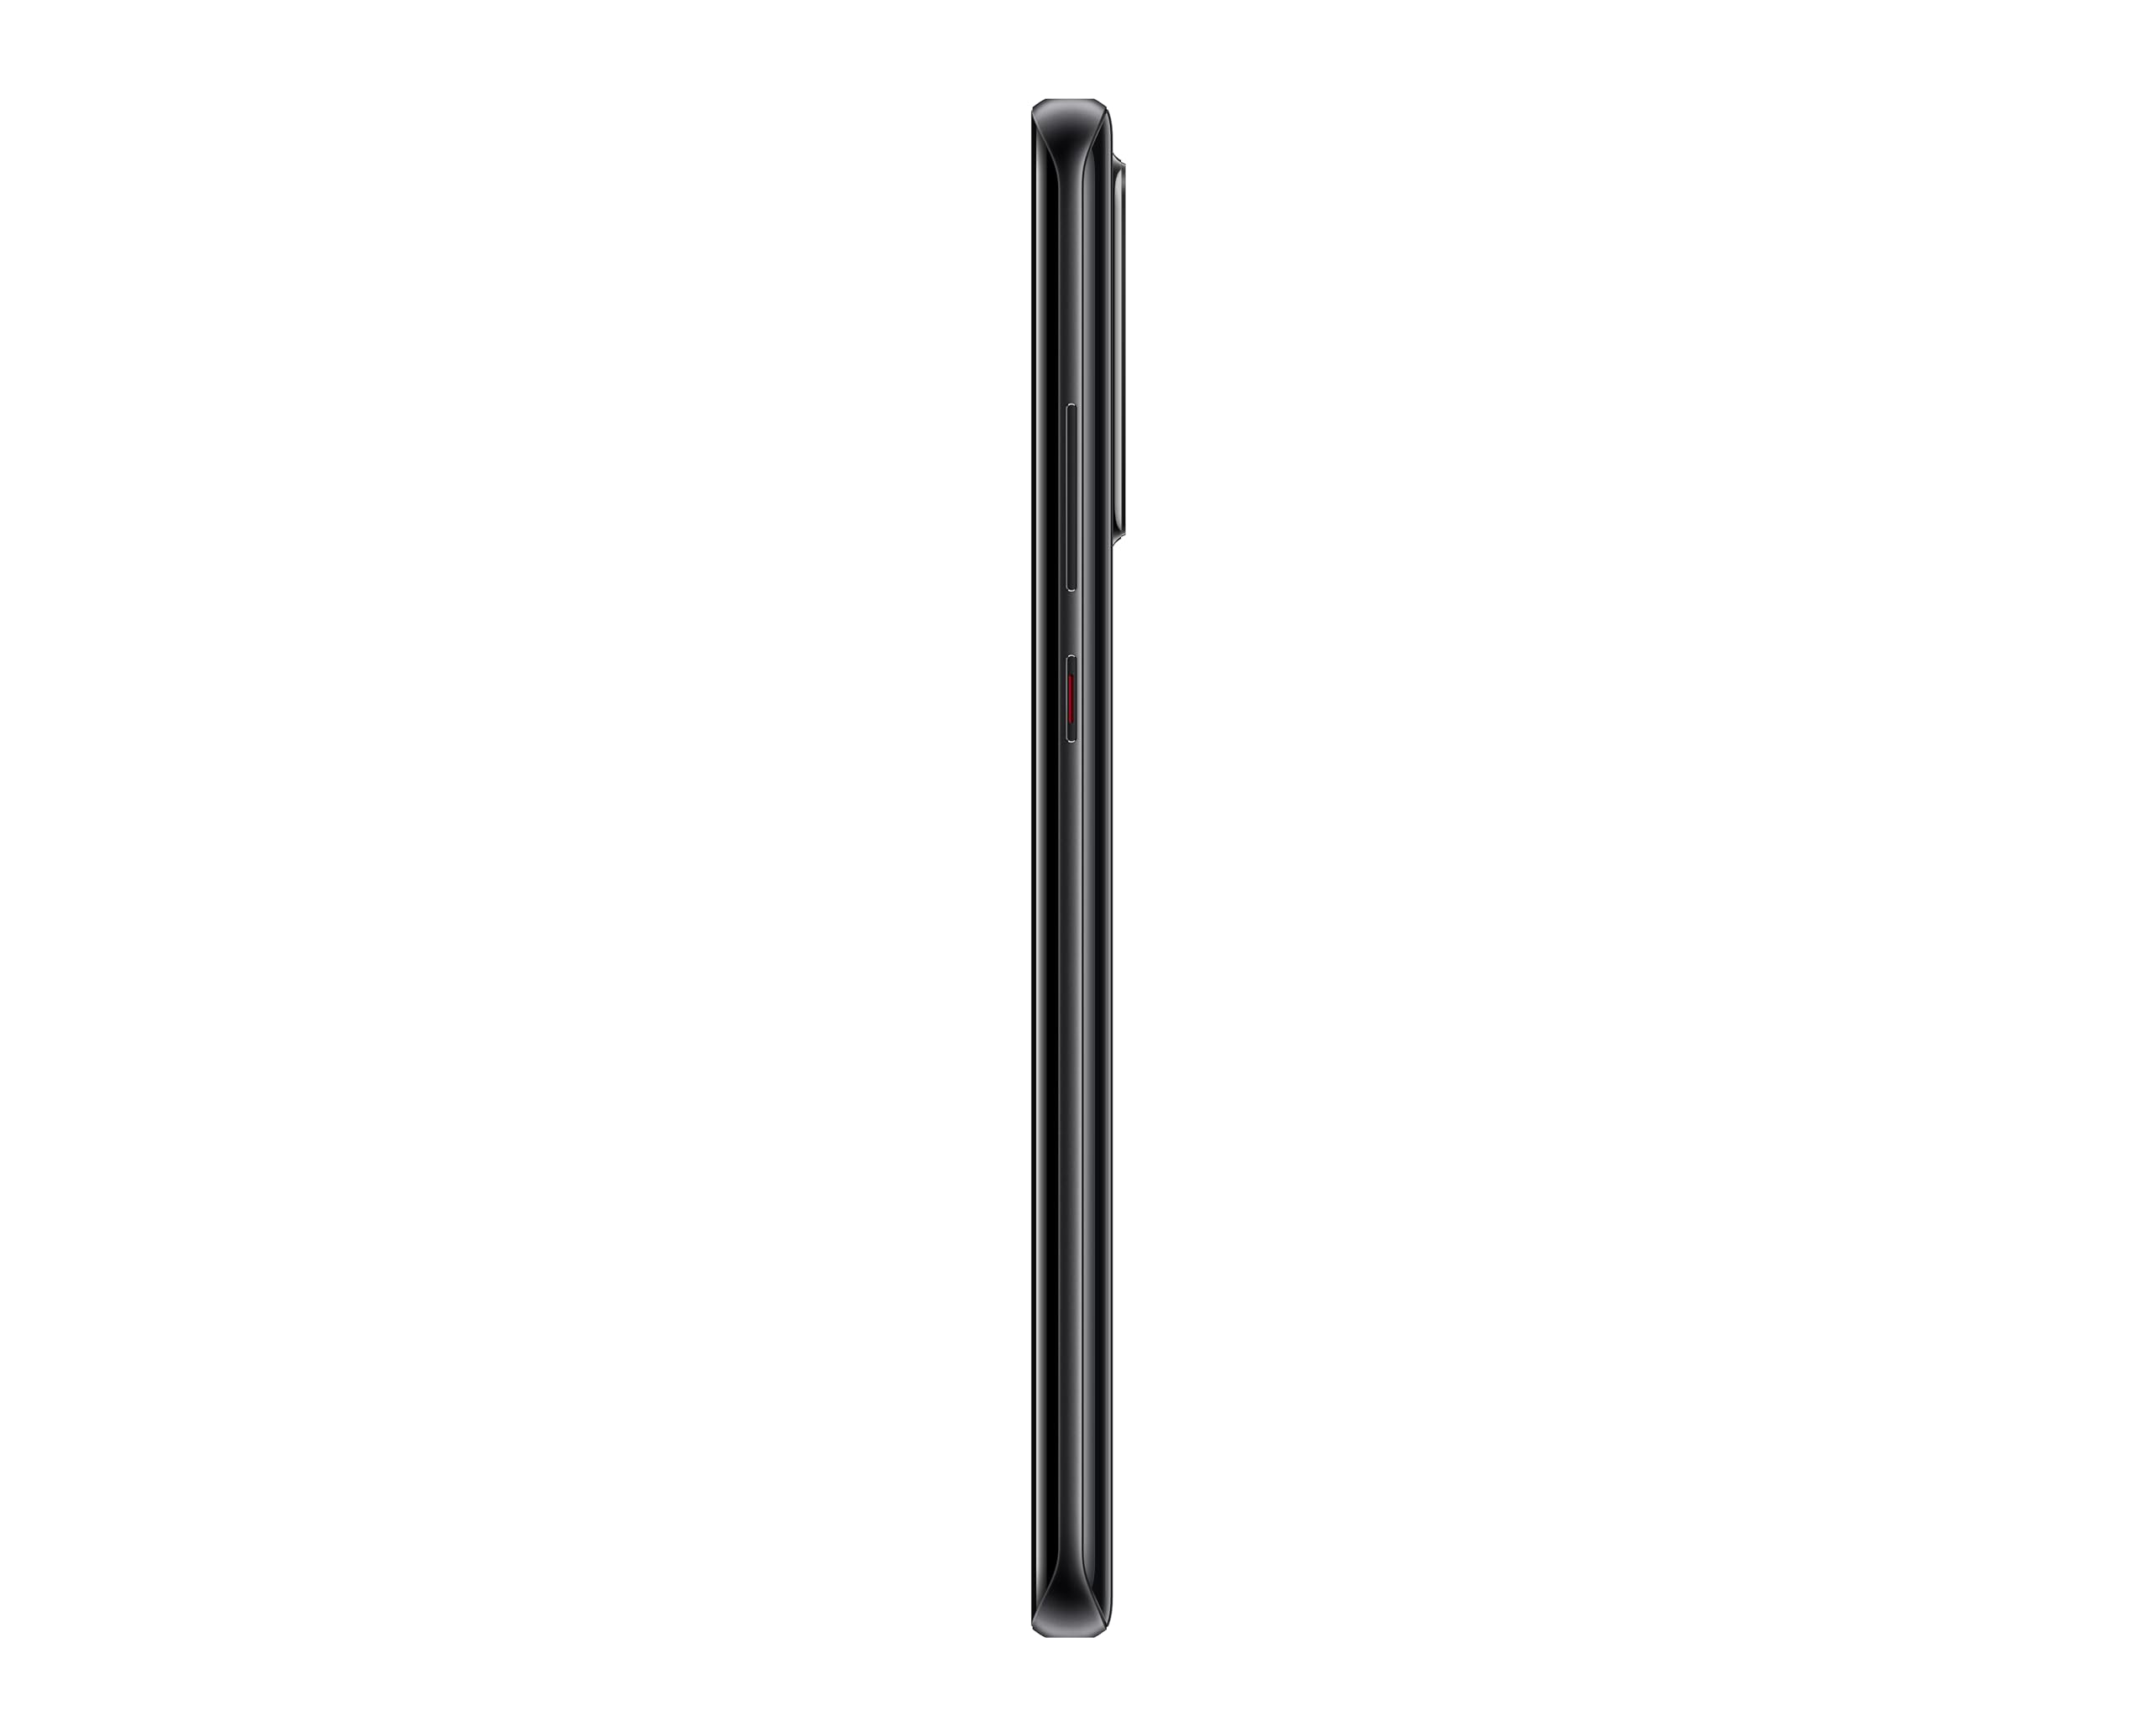 Huawei P30 Pro Dual/Hybrid-SIM 128GB VOG-L29 (GSM Only, No CDMA) Factory Unlocked 4G/LTE Smartphone - International Version (Midnight Black)